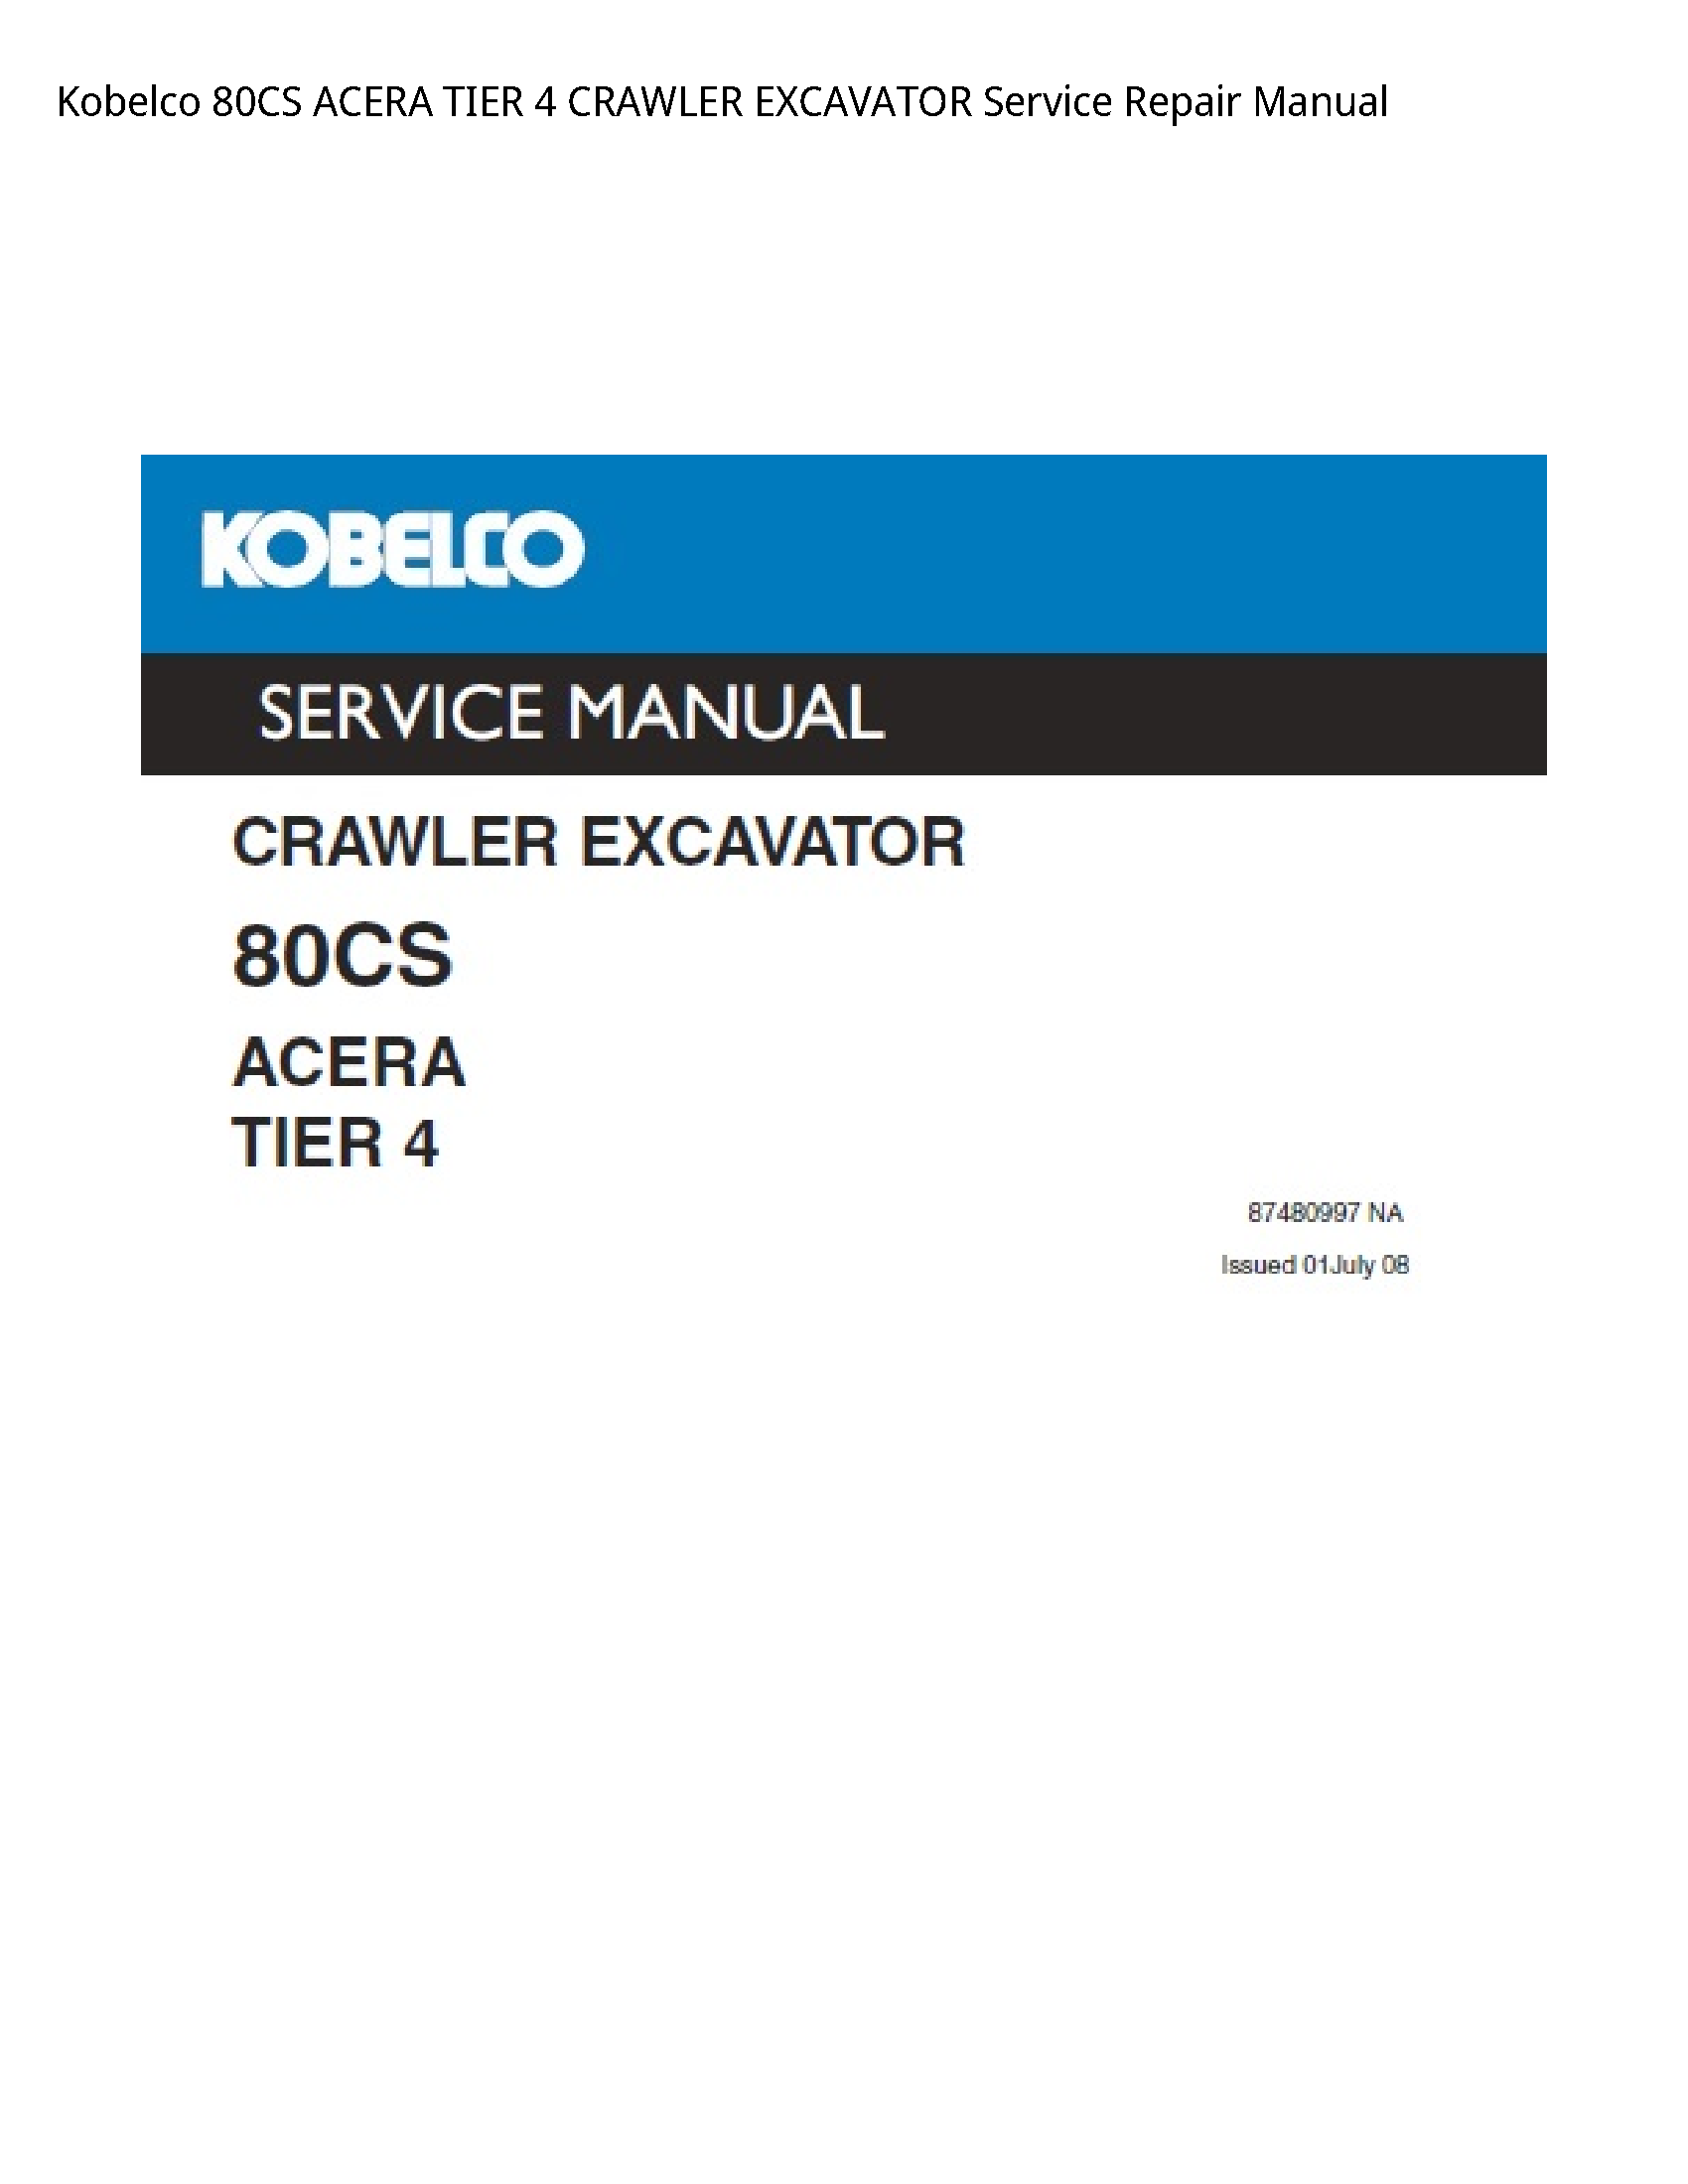 Kobelco 80CS ACERA TIER CRAWLER EXCAVATOR manual